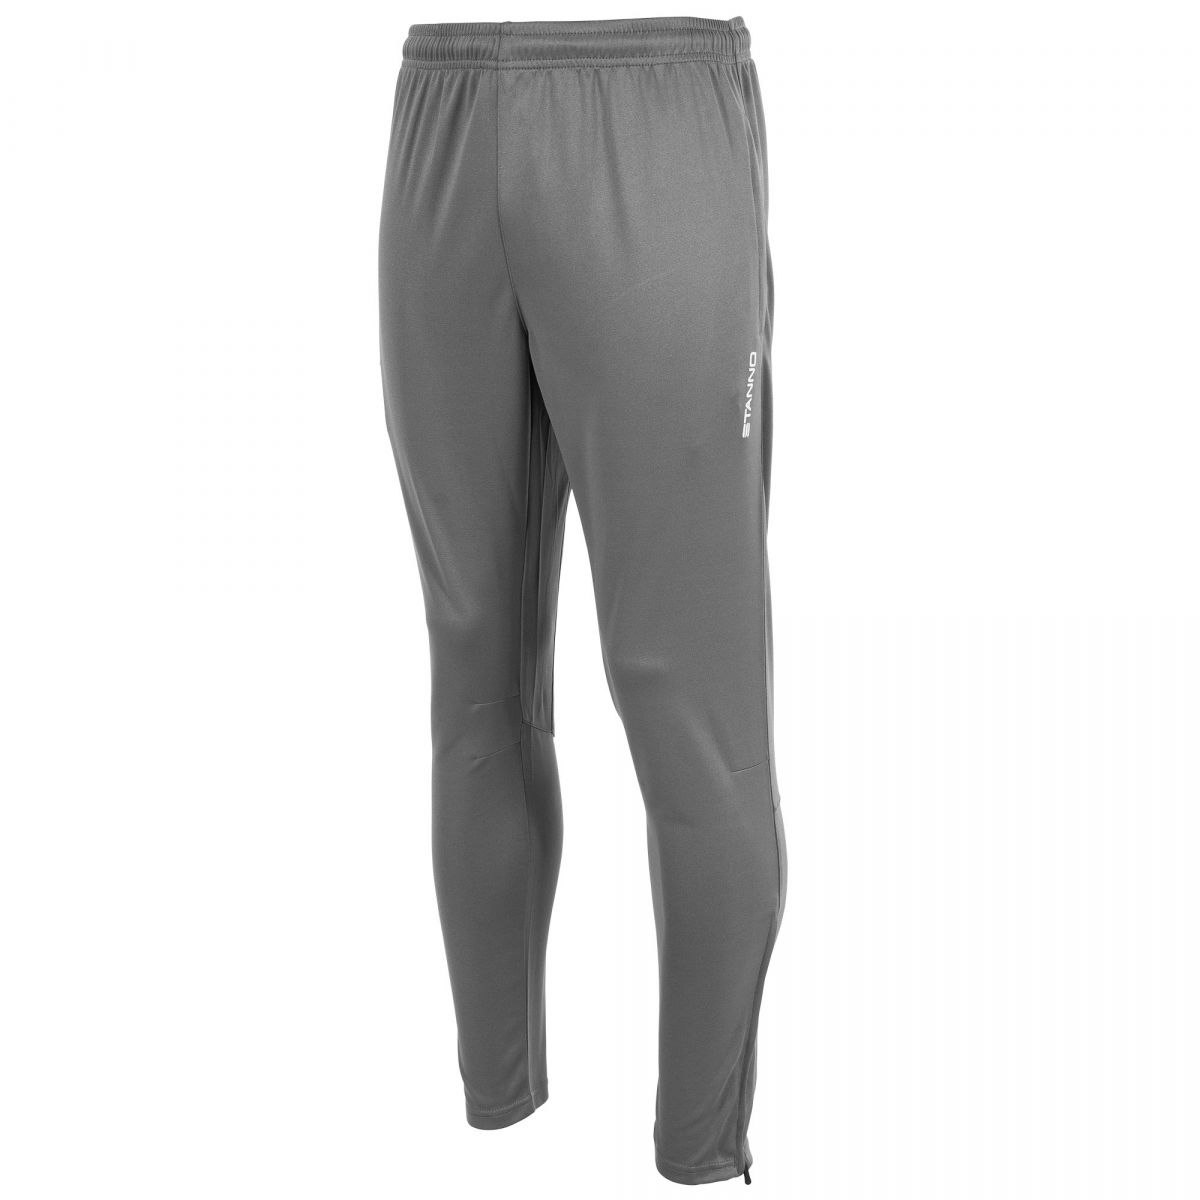 Shop & Support Stanno First Pants Unisex - Teamsales store - Sportprodukter  till ett bra pris